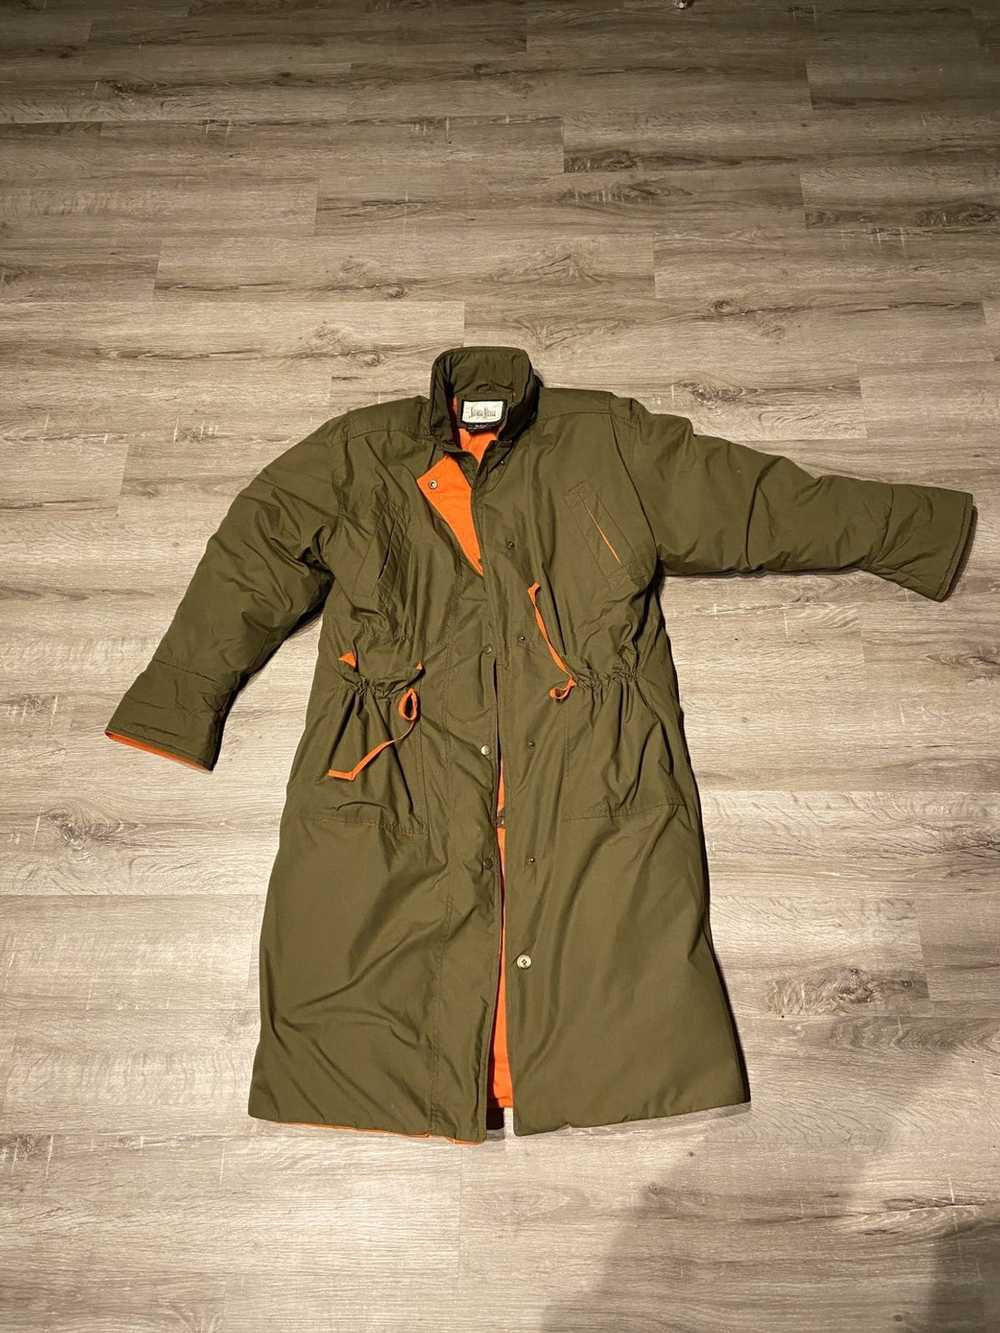 Neiman Marcus Neiman Marcus puffer trench coat - image 1